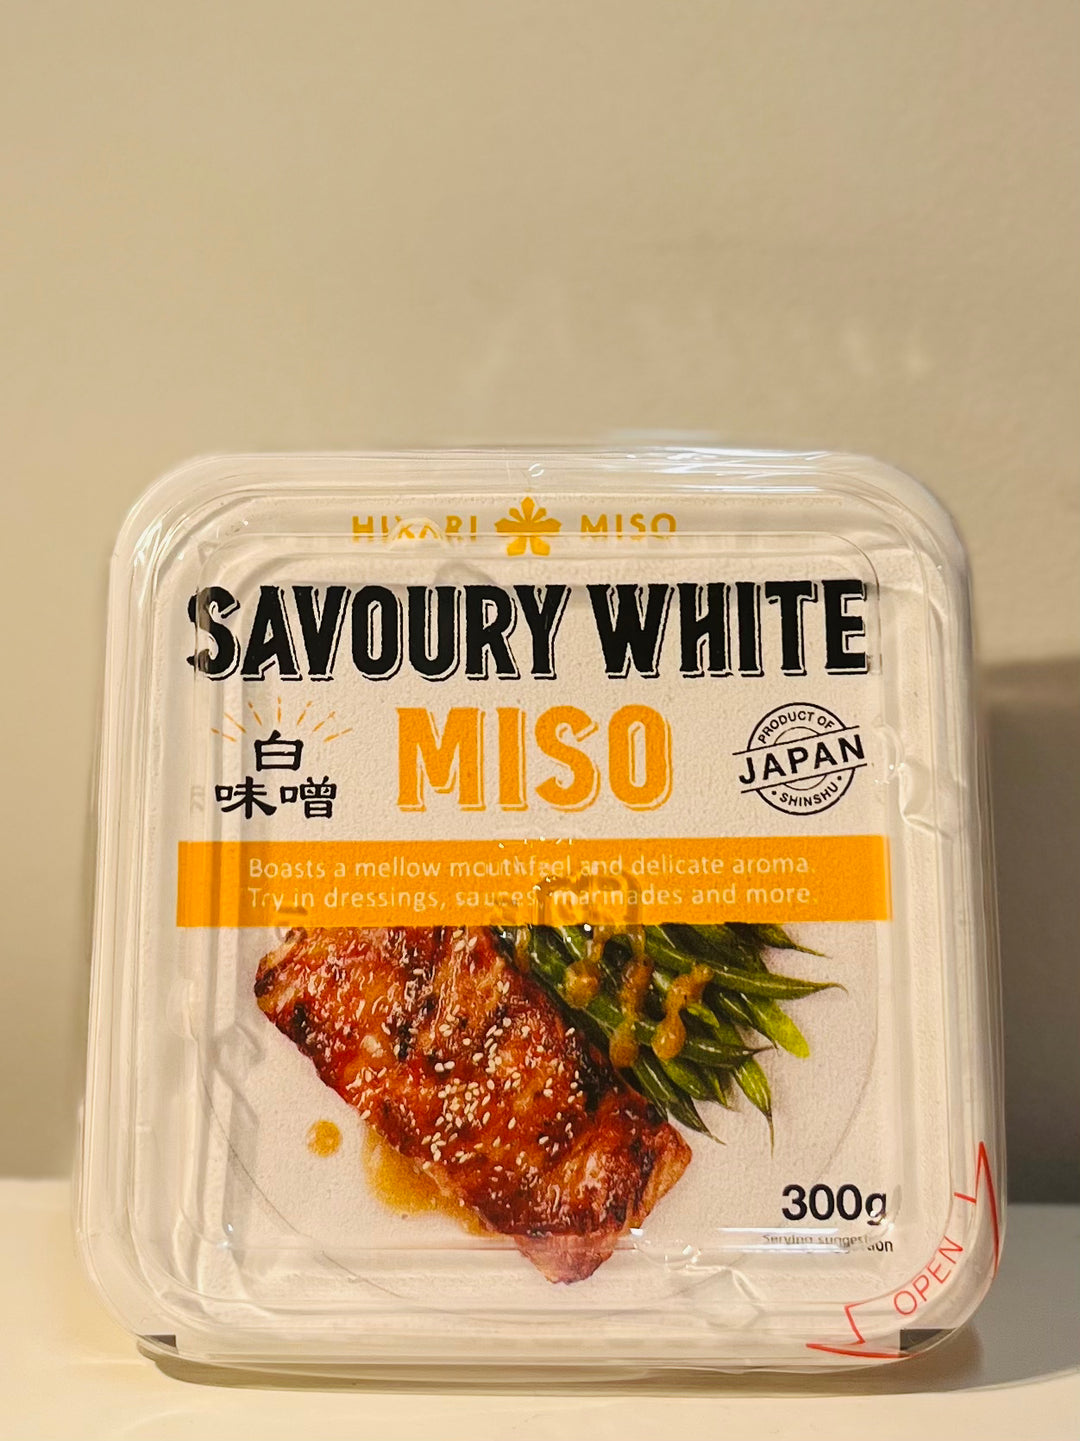 Hikarimiso Savoury White Miso 300g